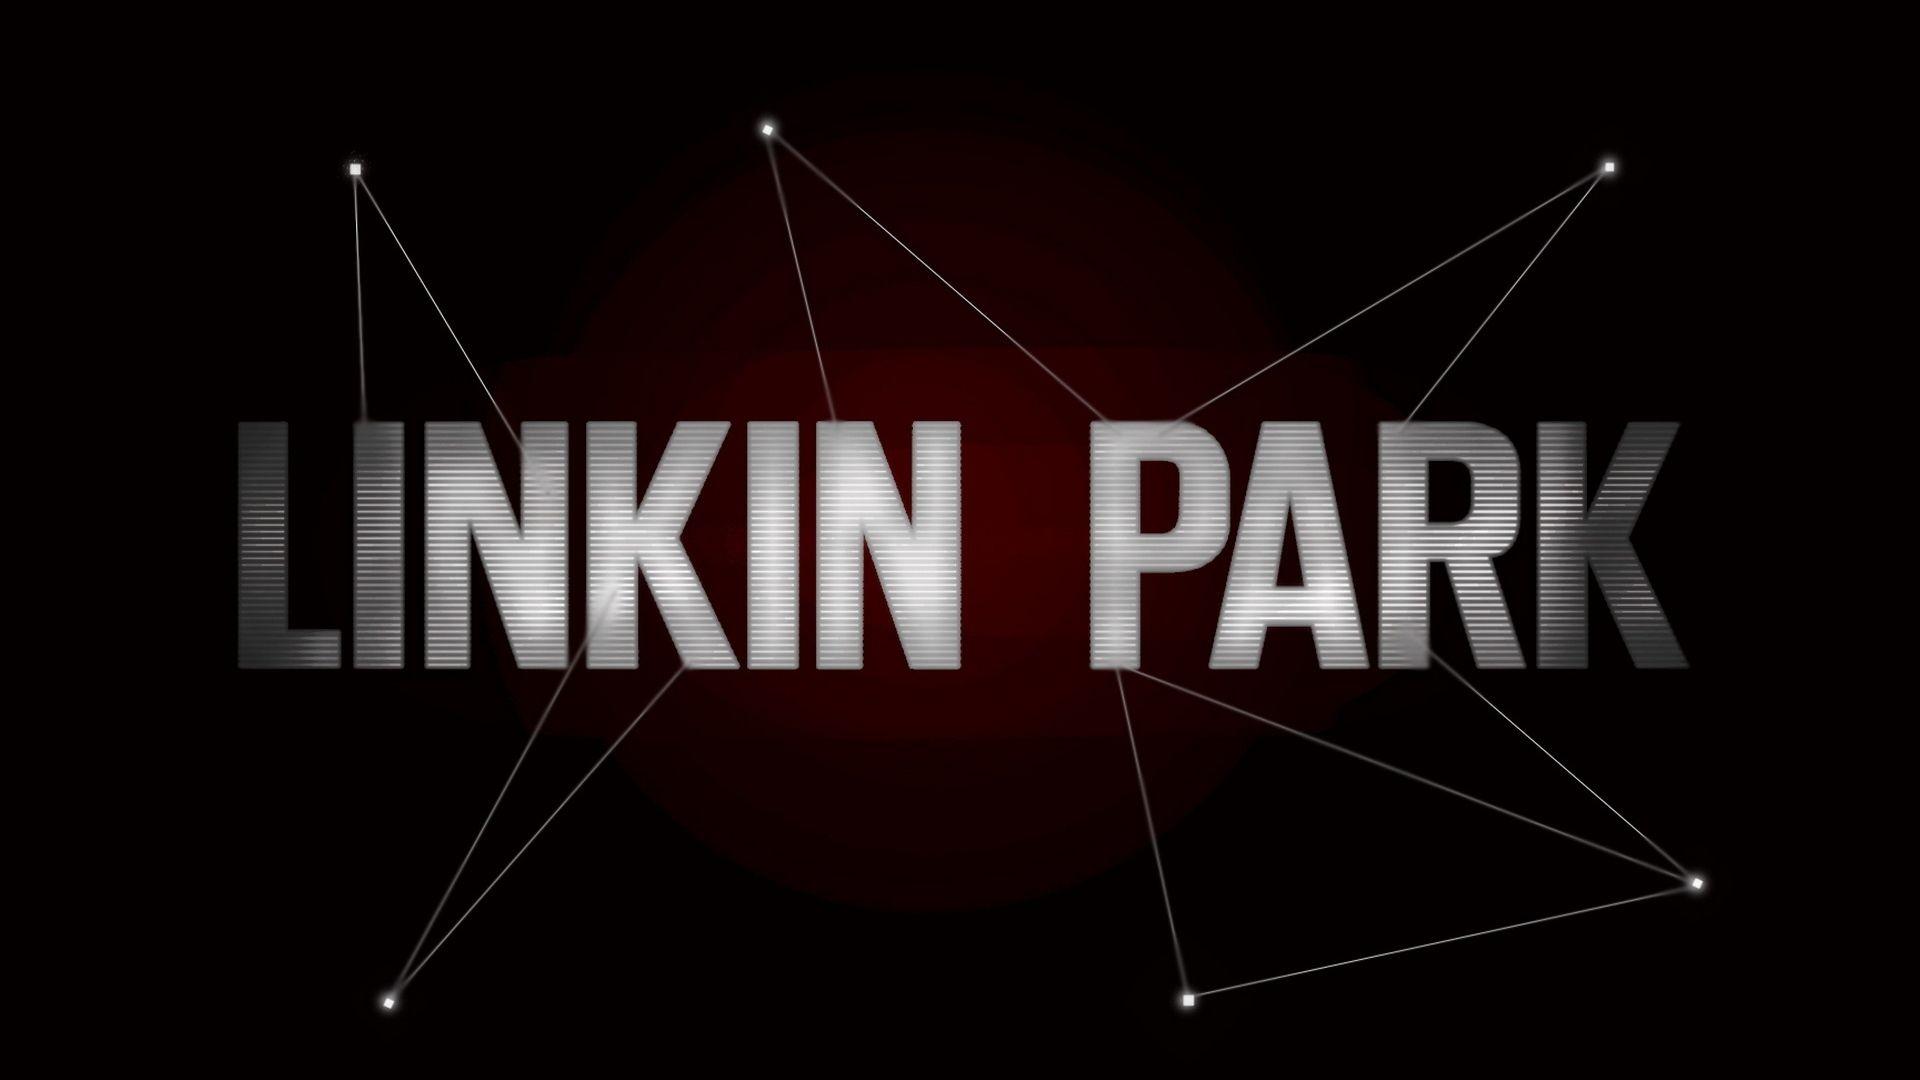 Full HD 1080p Linkin park Wallpaper HD, Desktop Background 1920x1080